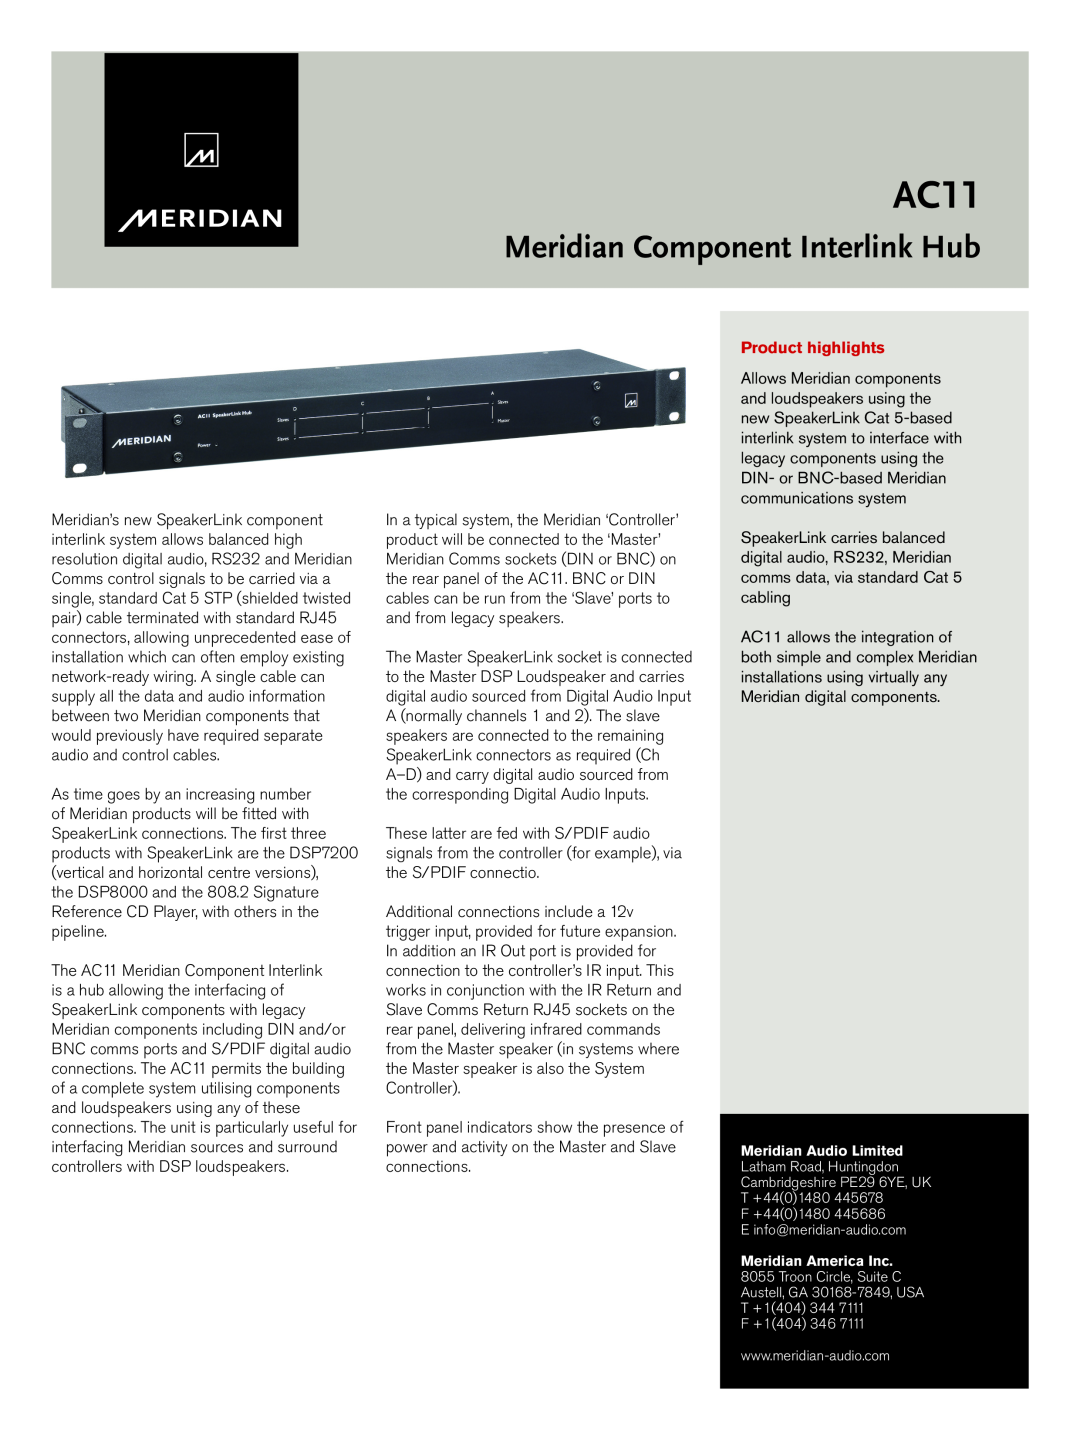 Meridian America AC11 manual Meridian Component Interlink Hub, Product highlights 